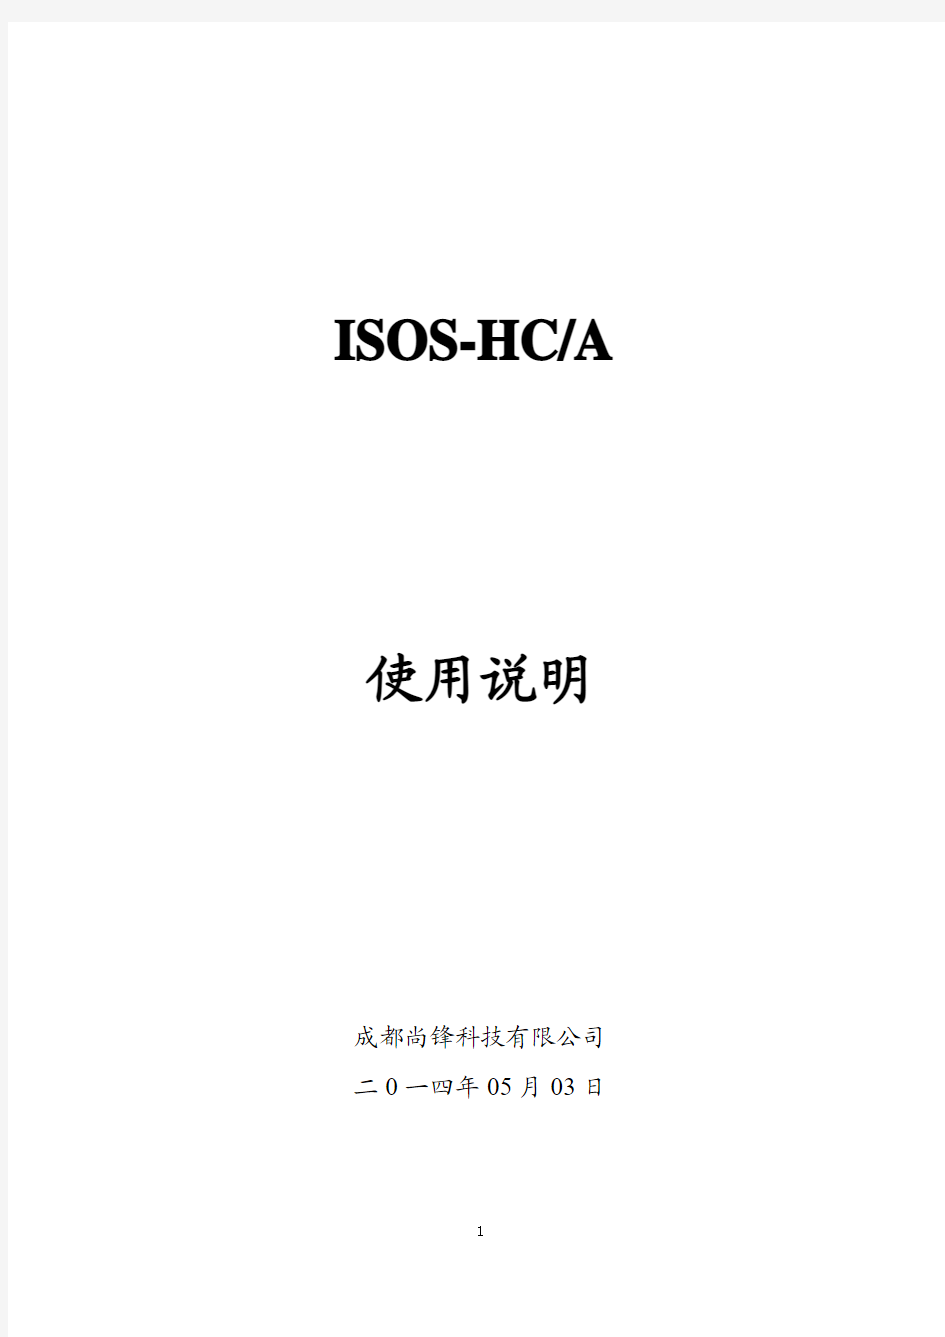 ISOS-HC(A)使用说明书(2014_05_03)